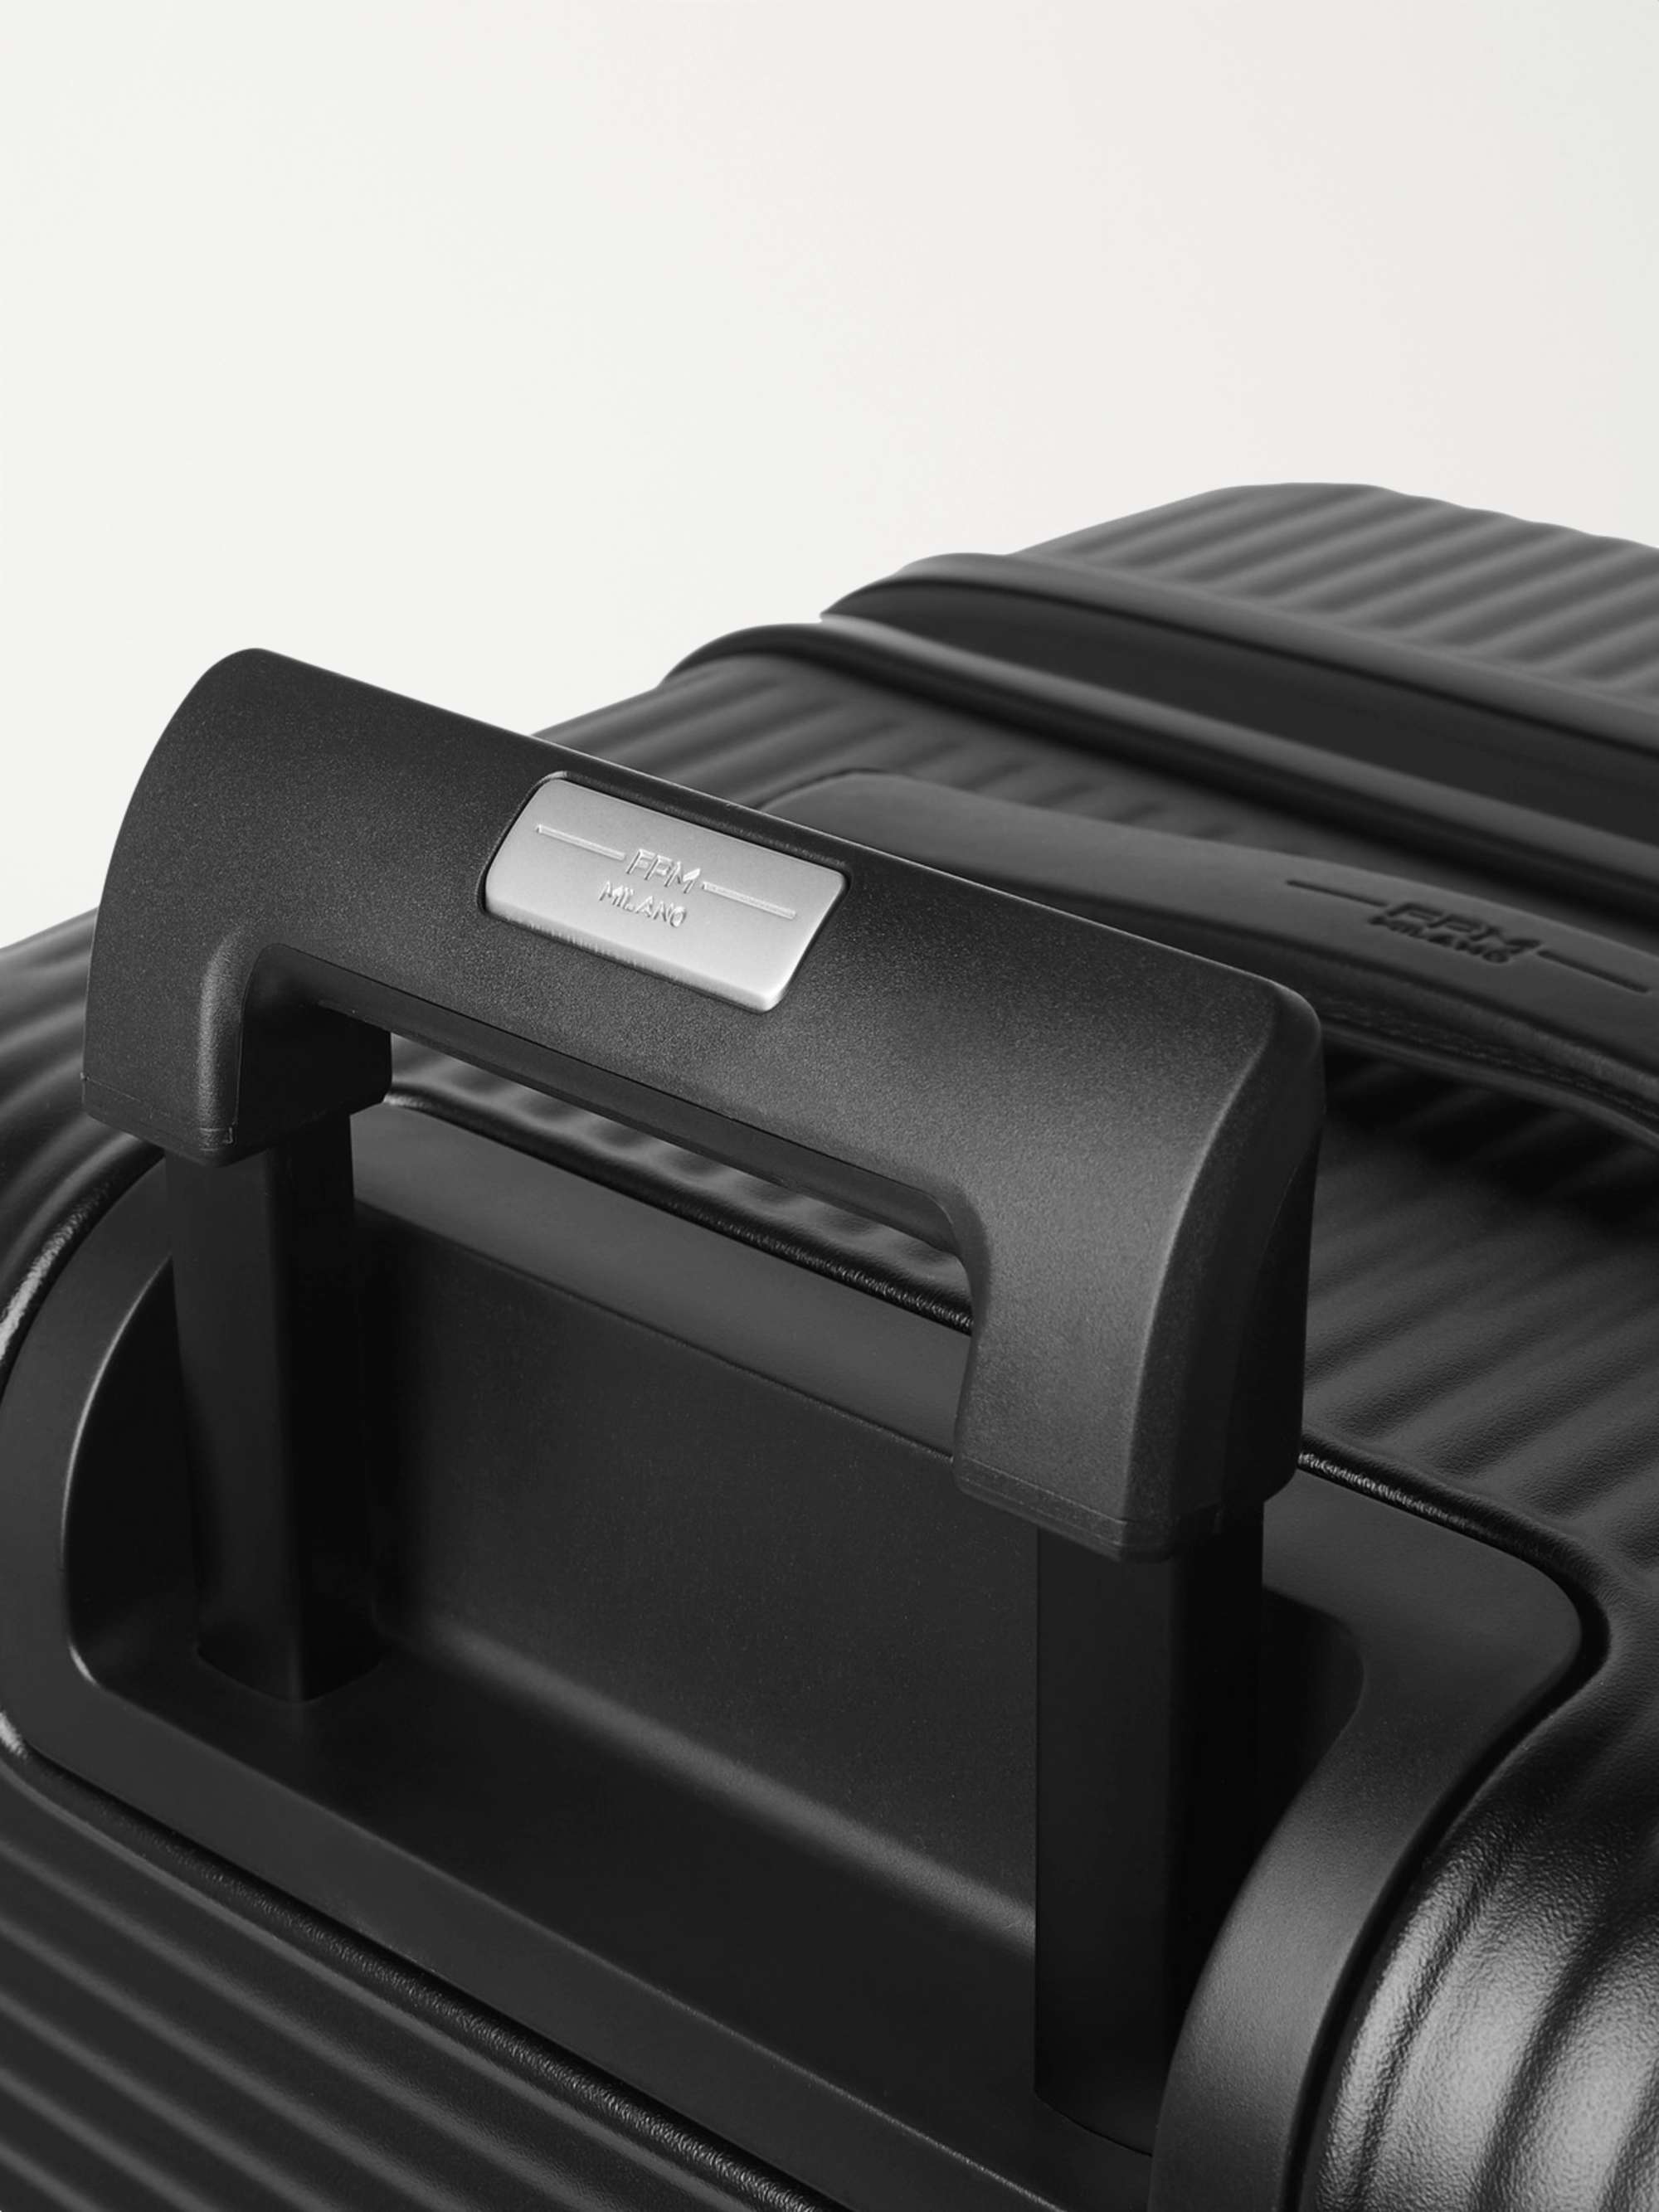 FPM MILANO + Marc Sadler Bank 73cm Leather-Trimmed Polycarbonate Suitcase